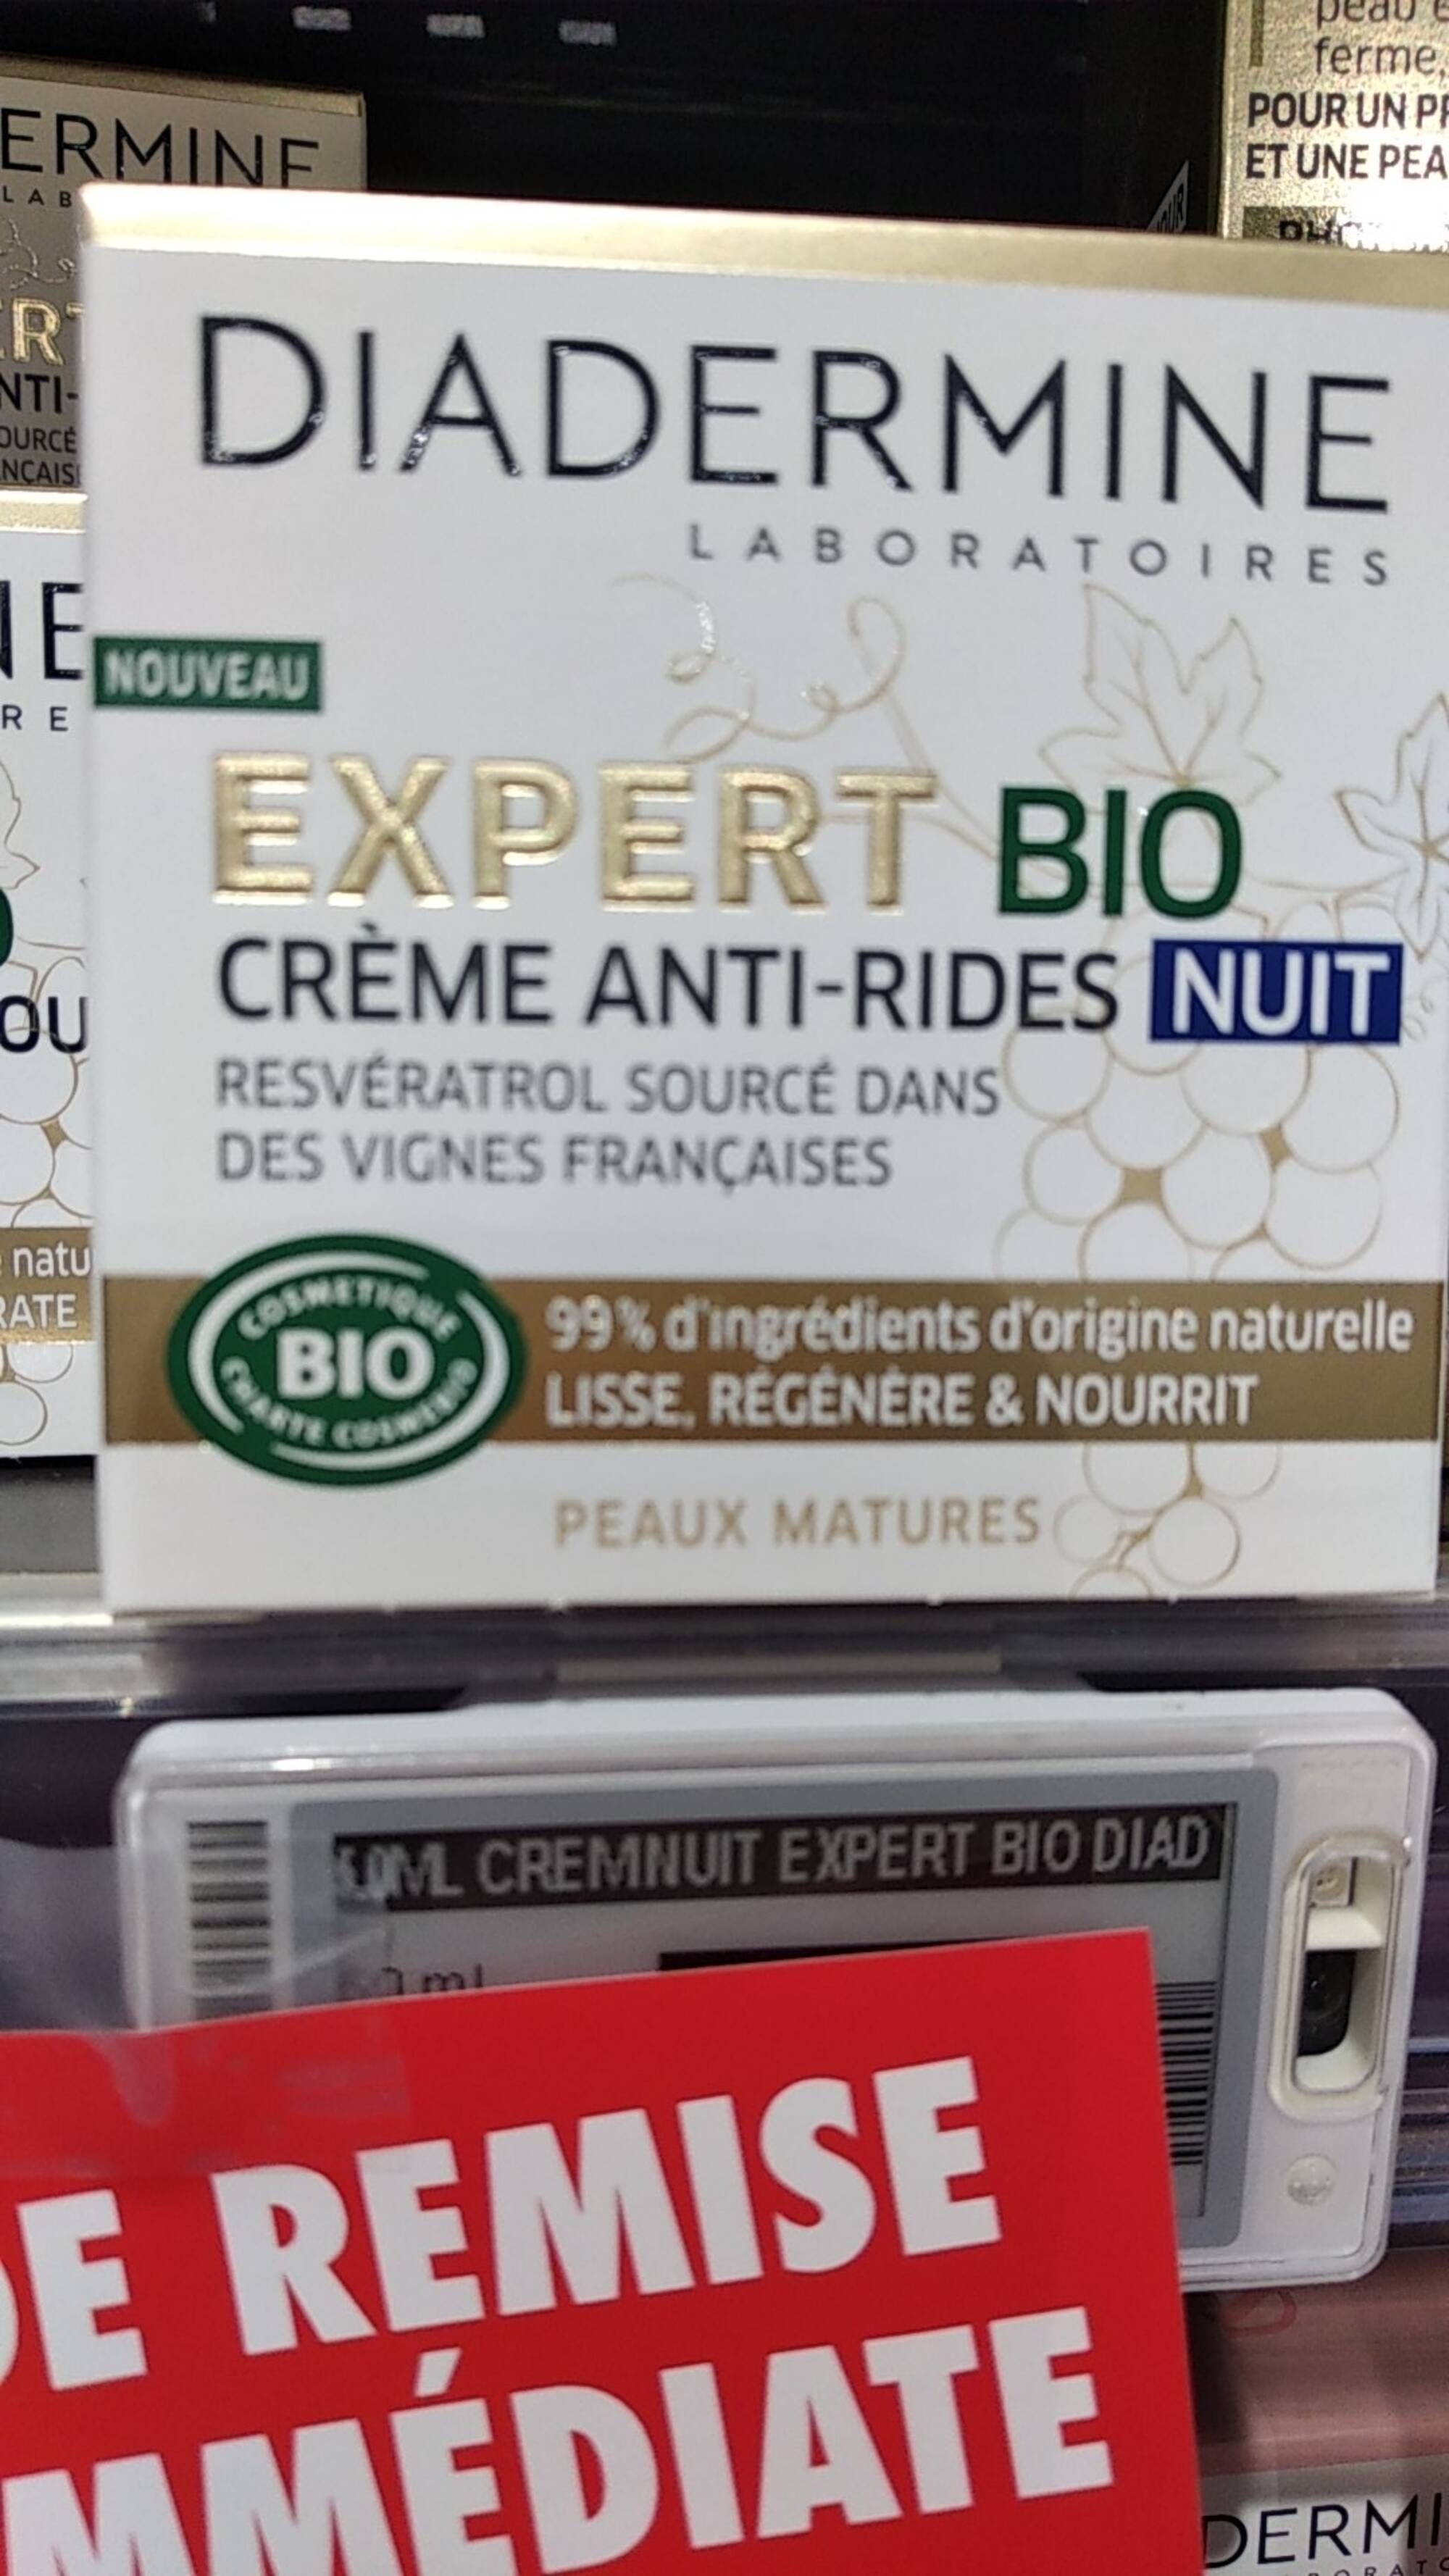 DIADERMINE - Expert bio - Crème anti-rides nuit